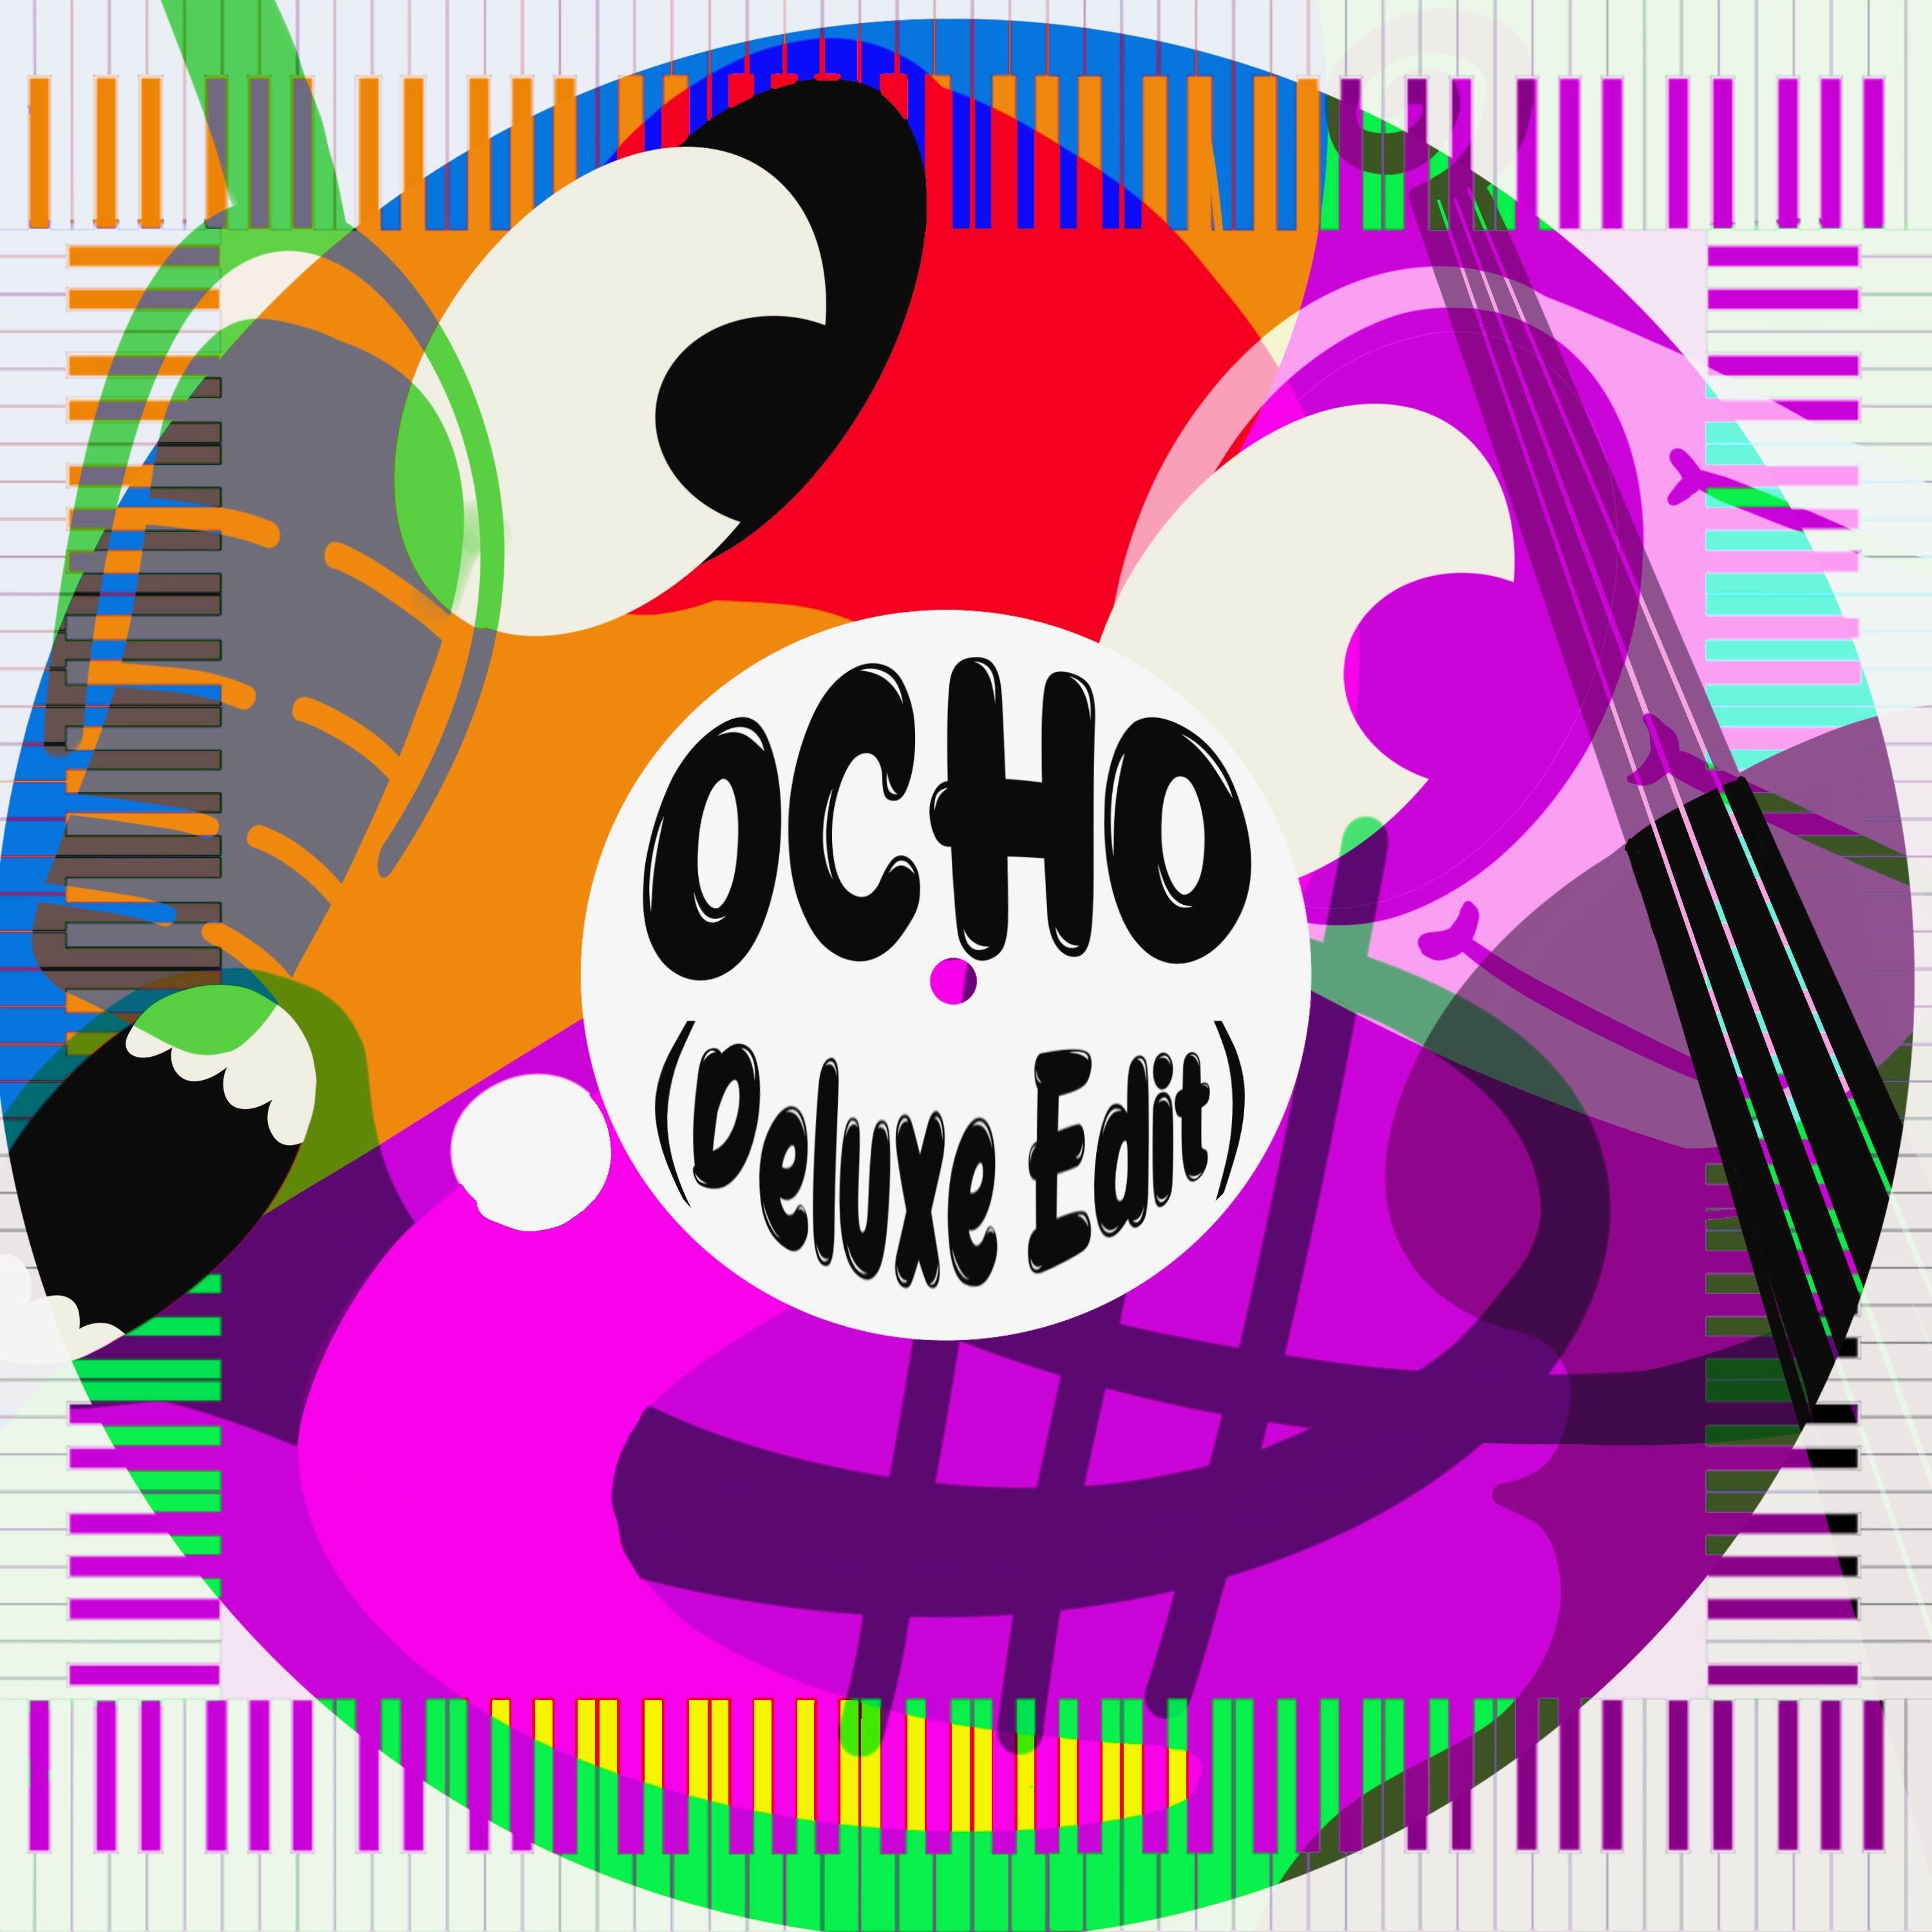 Download OCHO (DELUXE EDIT) - [on Spotify & all platforms]